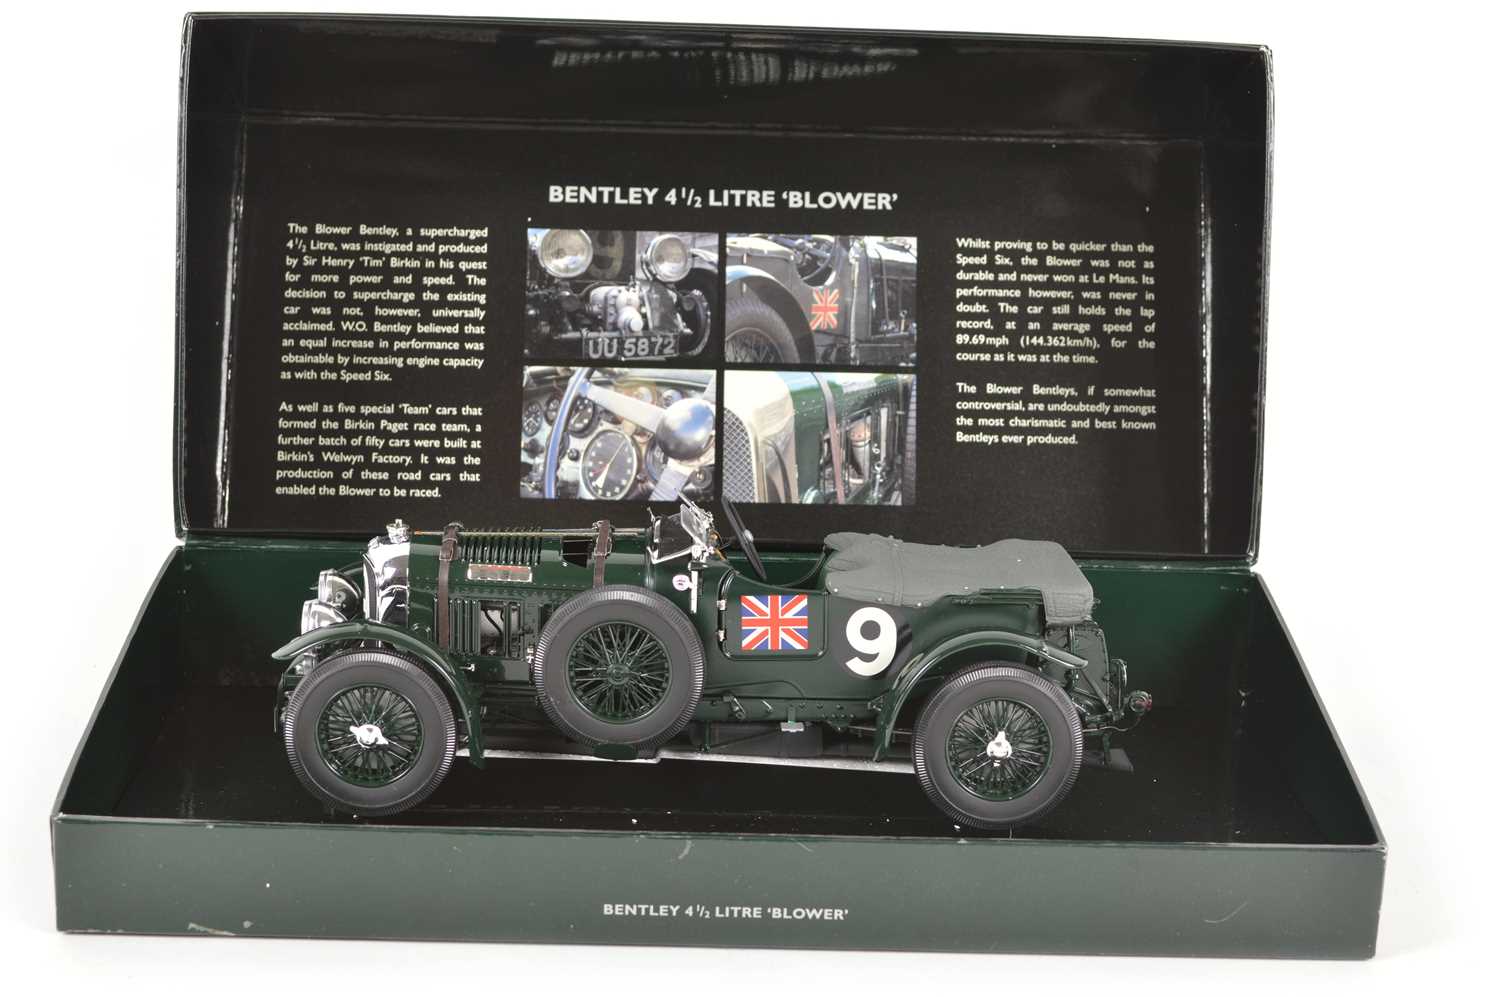 Minichamps 1:18 scale model of a Bentley 4.5ltr (4 1/2) Blower racing car